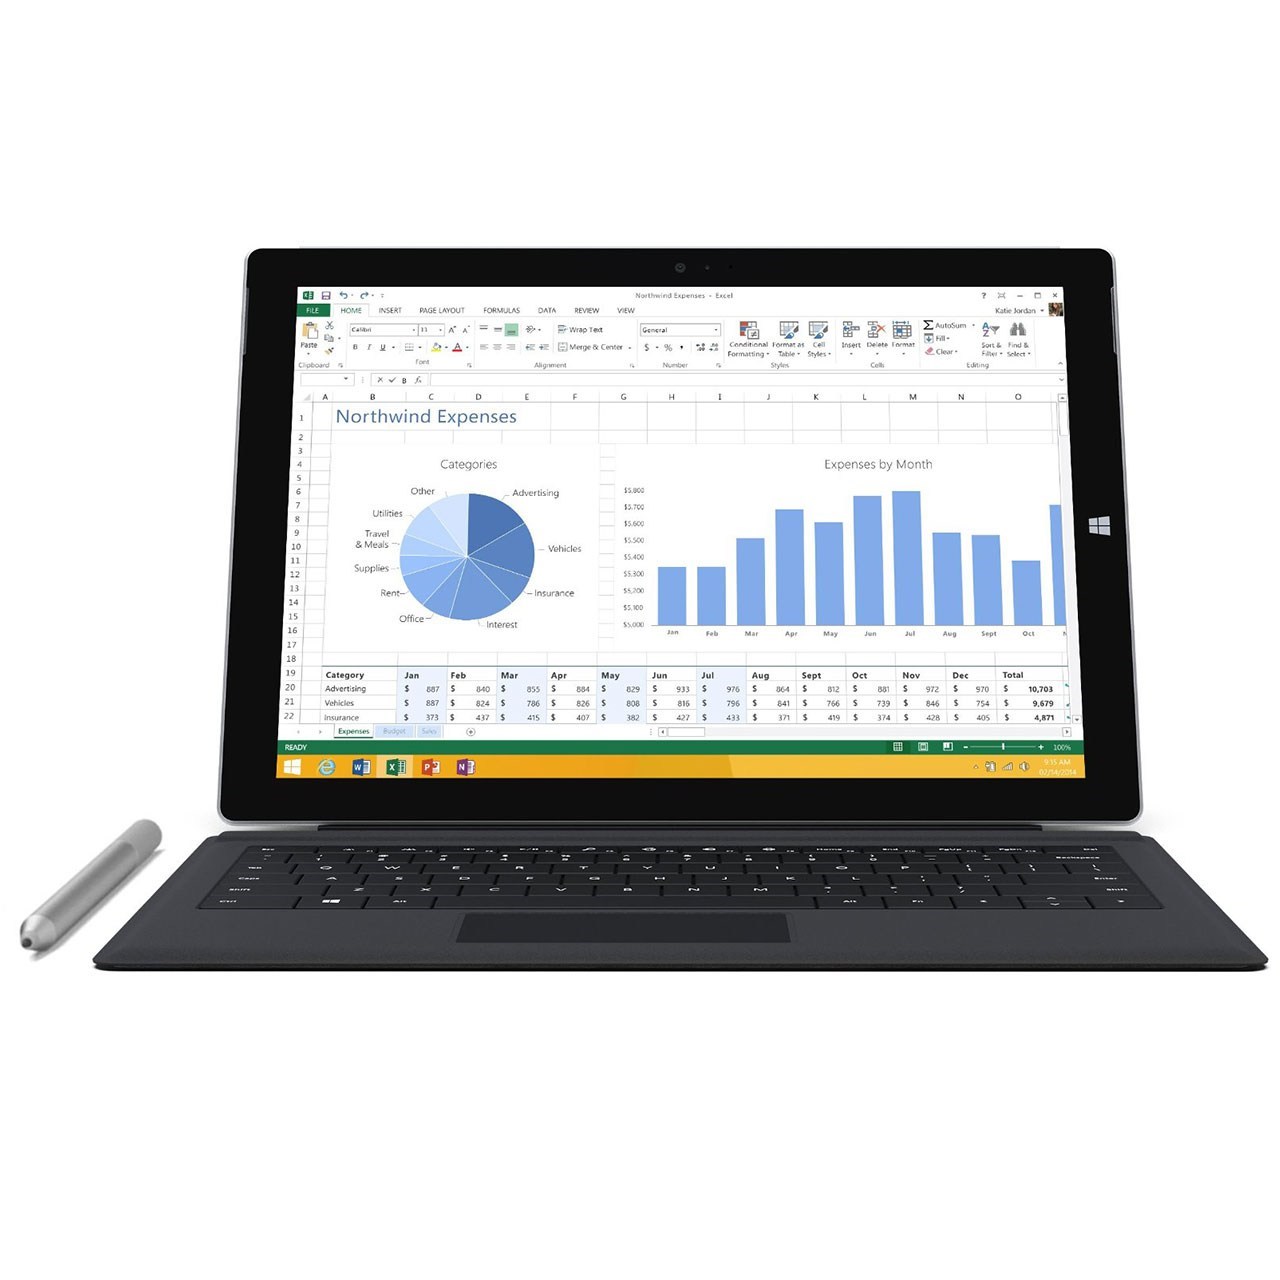 تبلت مایکروسافت مدل Surface Pro 3 - B به همراه کیبورد ظرفیت 128 گیگابایت